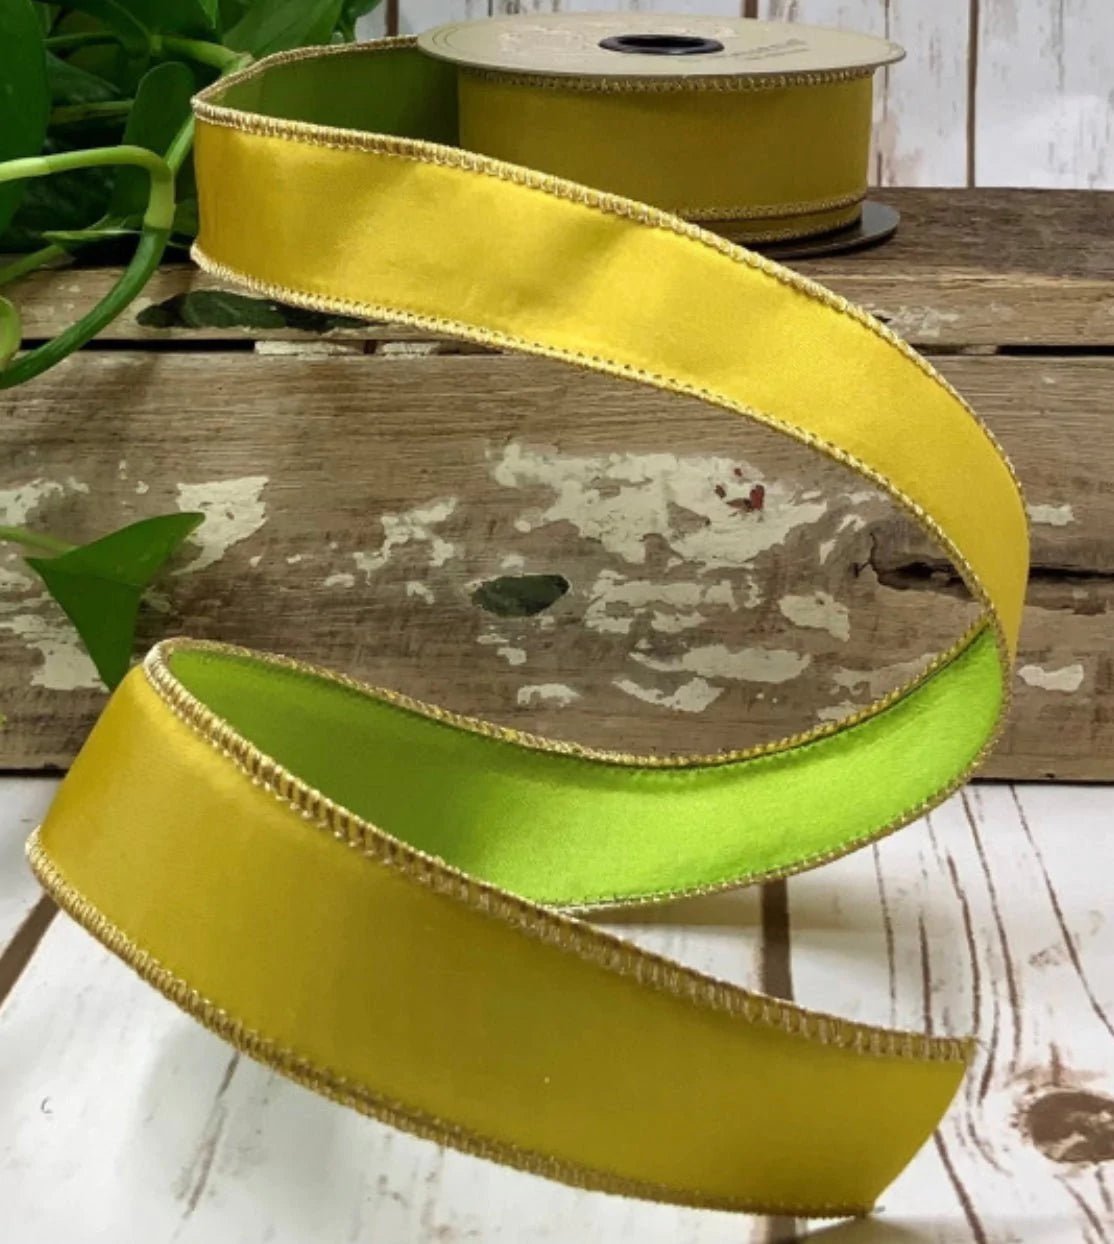 D Stevens 1” Taffeta double sided yellow / green wired ribbon - Greenery MarketRibbons & Trim09-3933